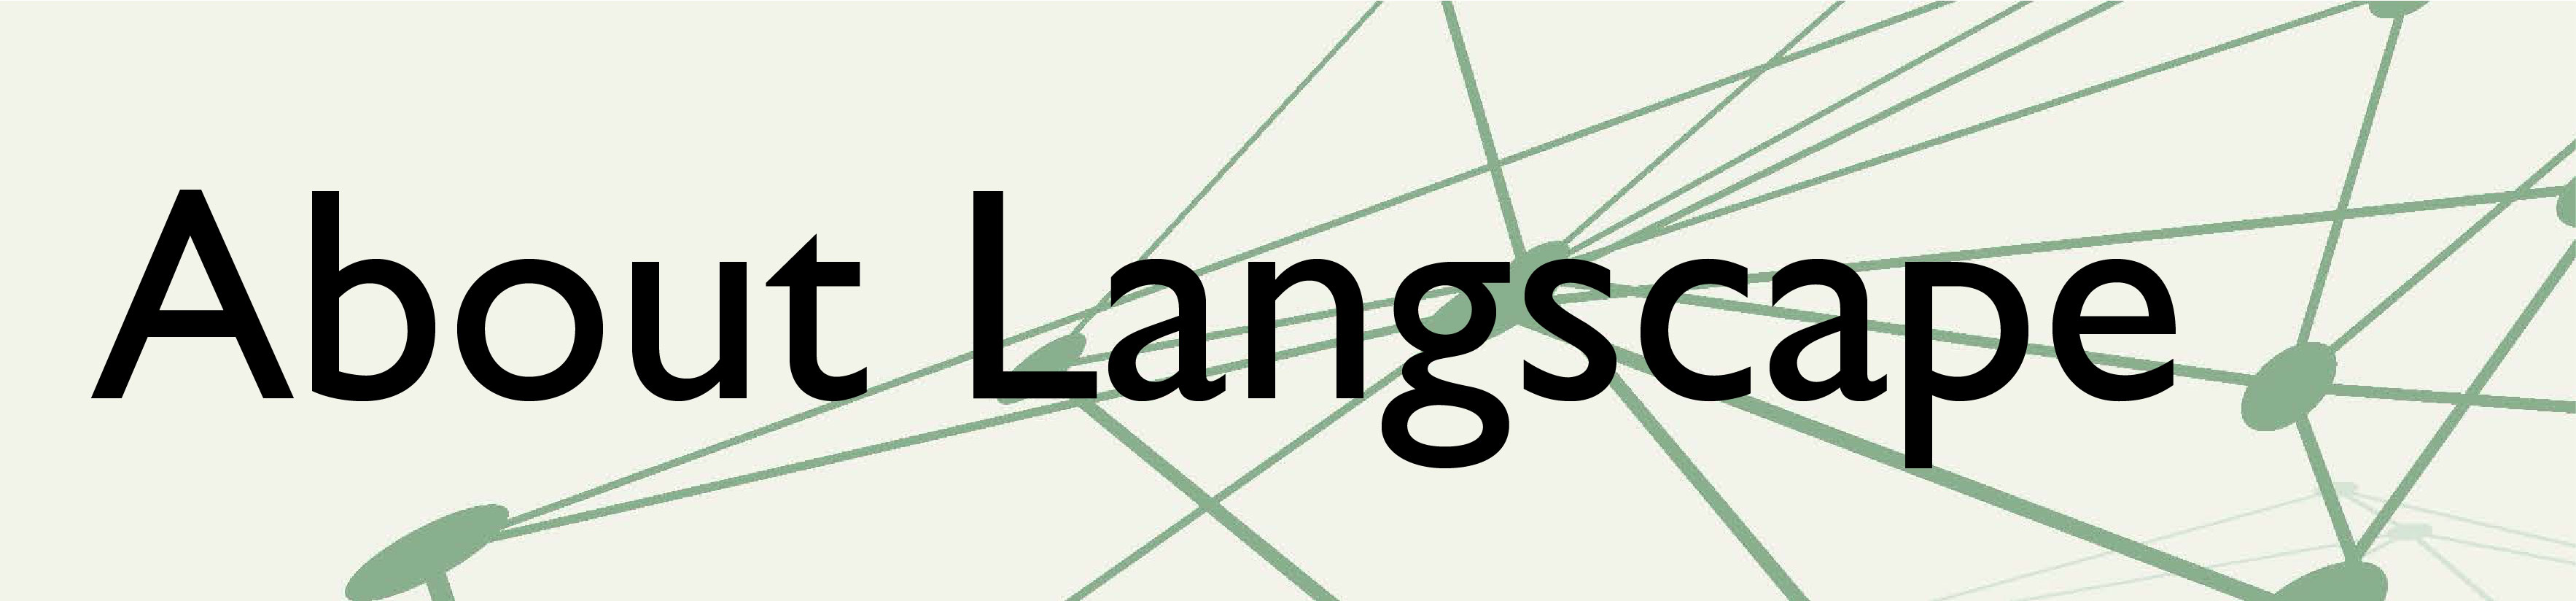 Langscape website grapical header for folder About